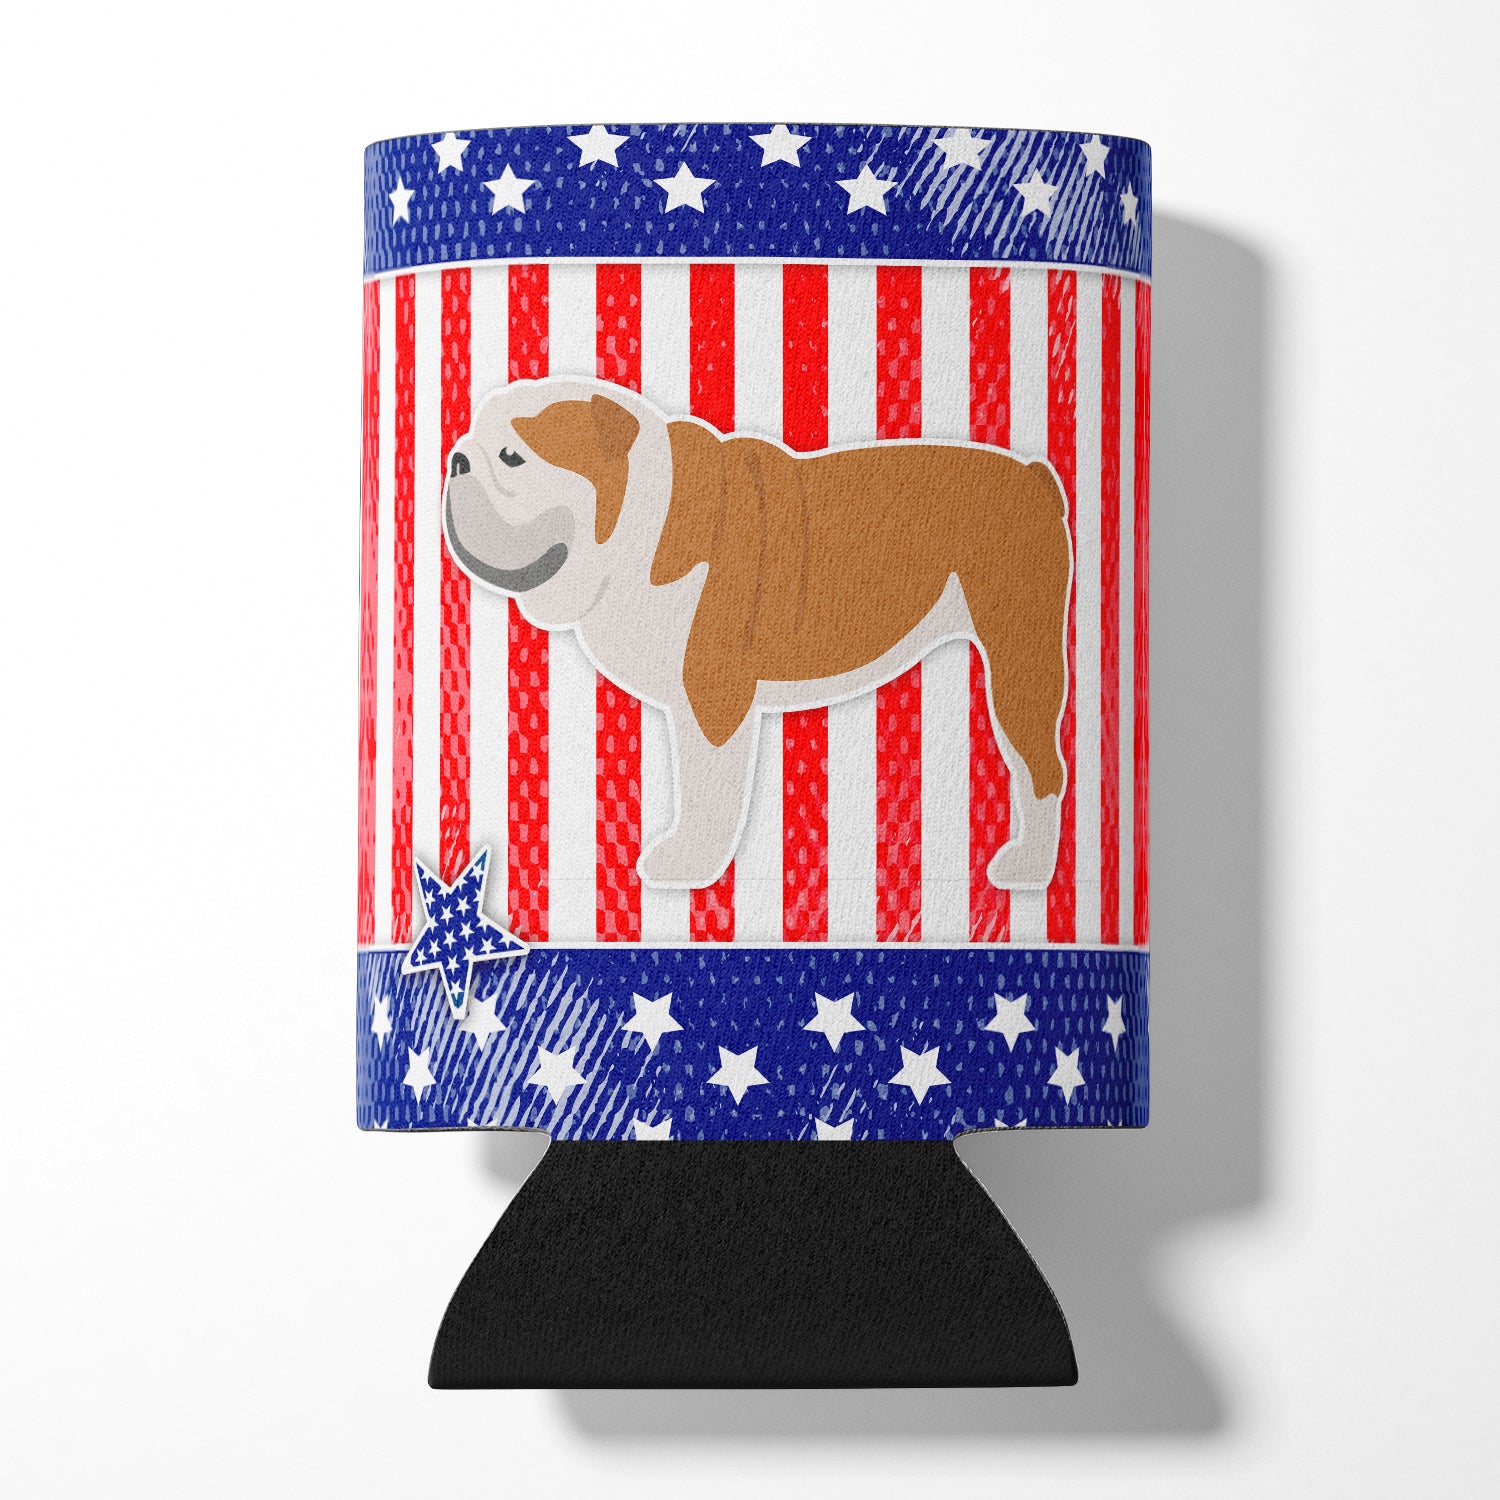 USA Patriotic English Bulldog Can or Bottle Hugger BB3362CC